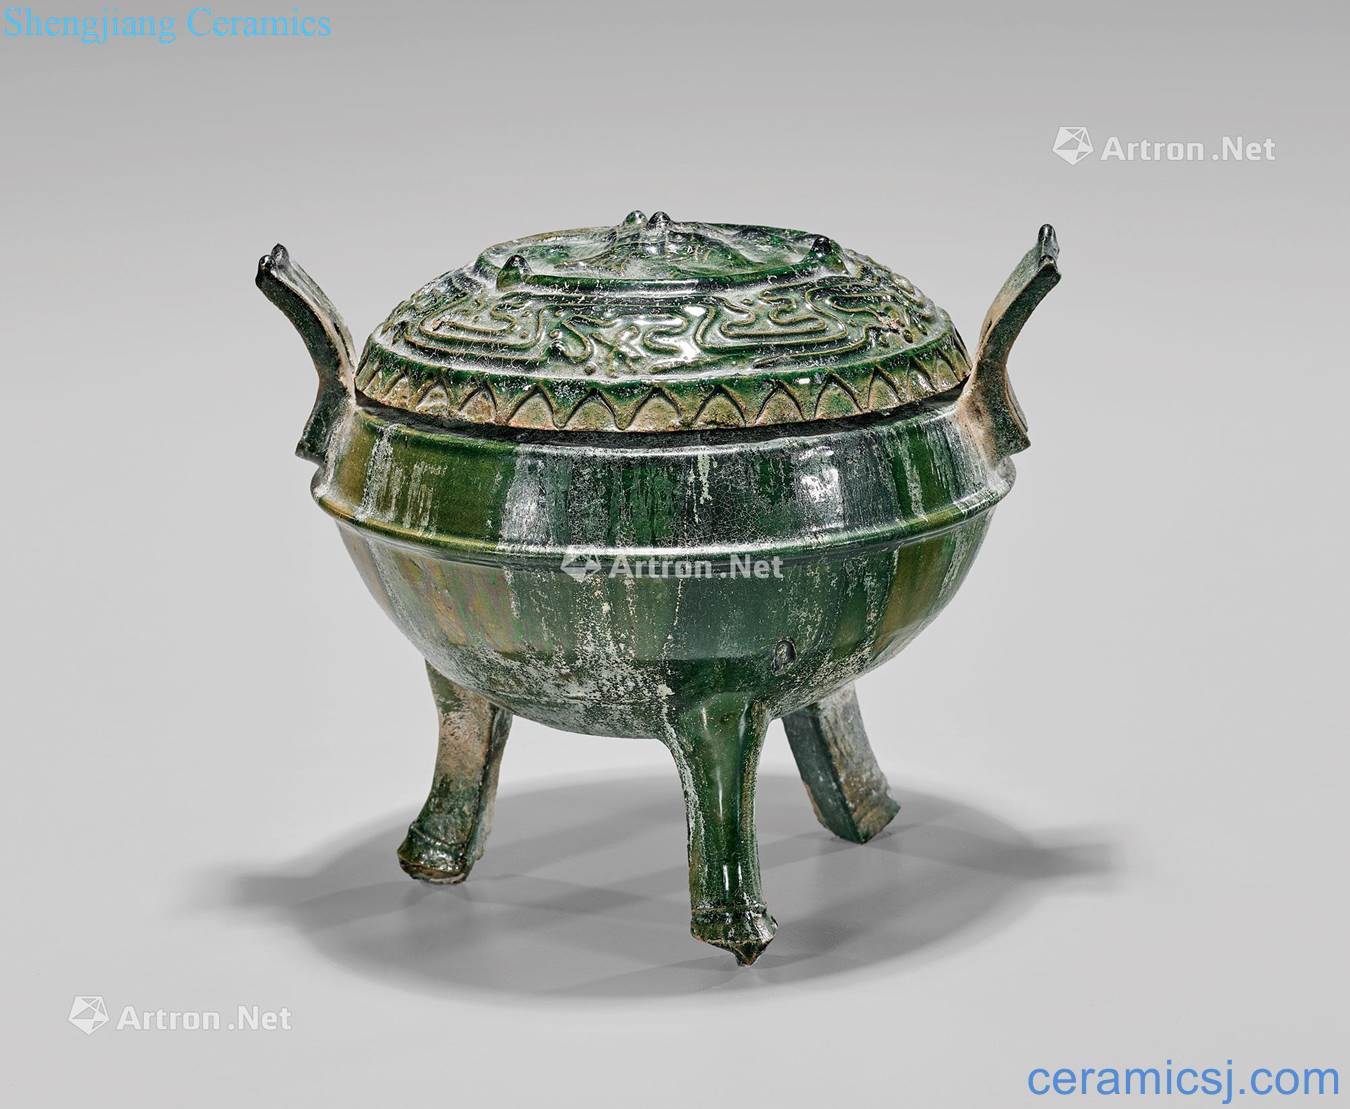 The han dynasty green glazed pottery censer